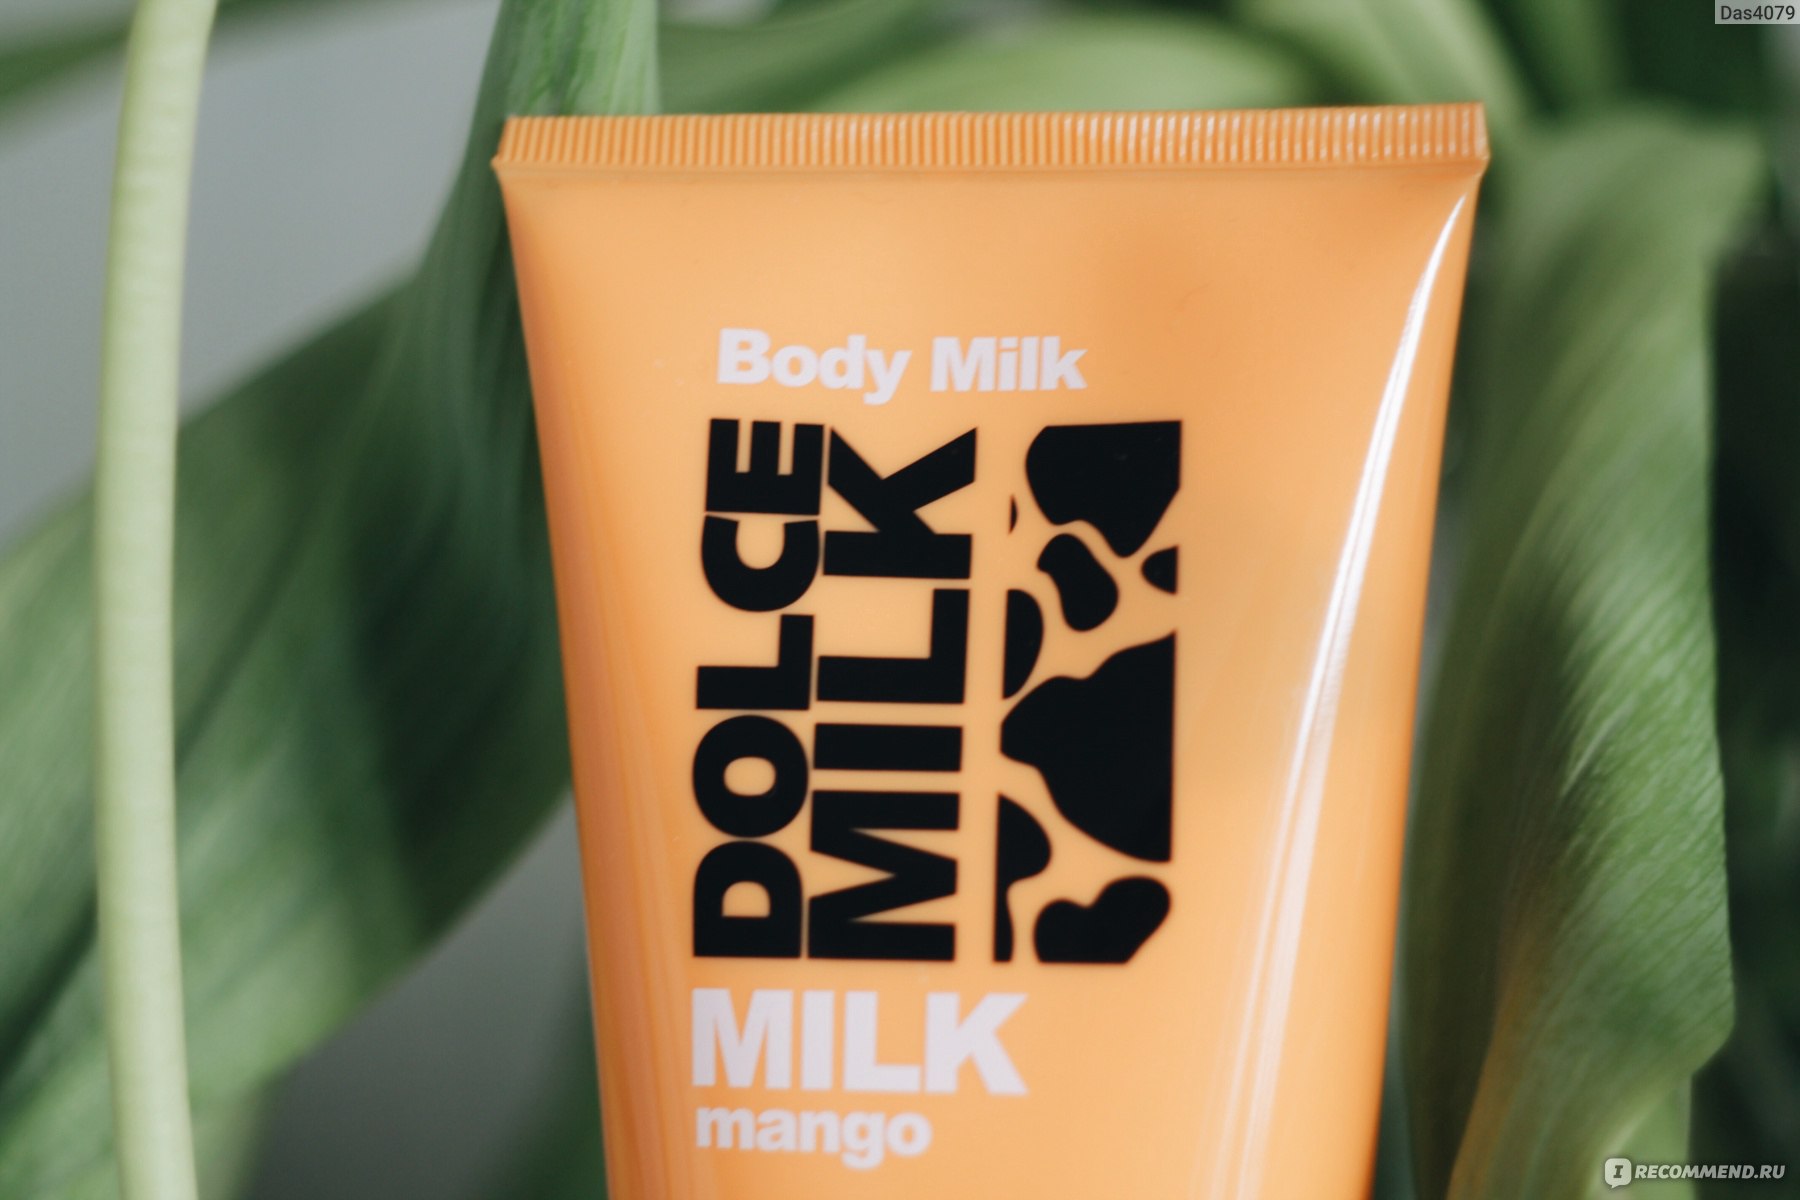 Dolce milk эстетика фото